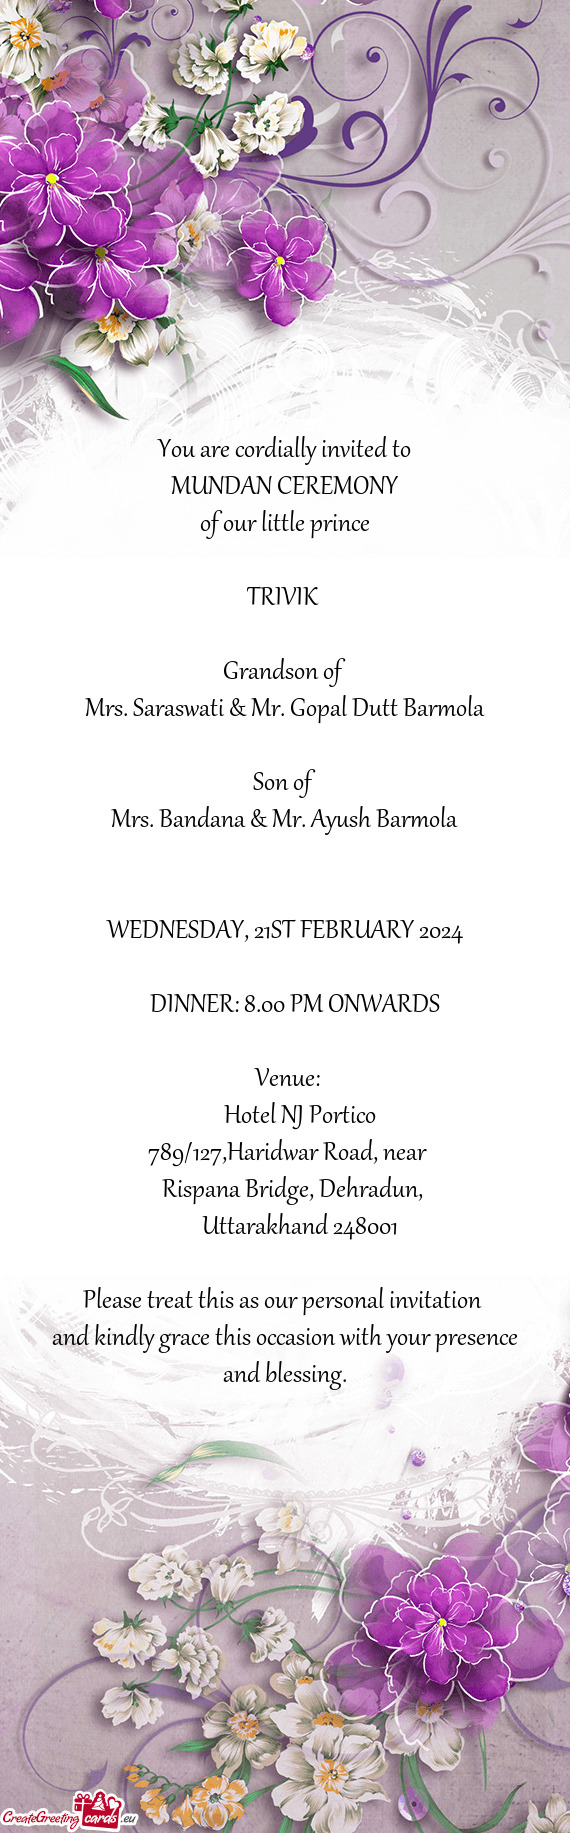 Mrs. Bandana & Mr. Ayush Barmola